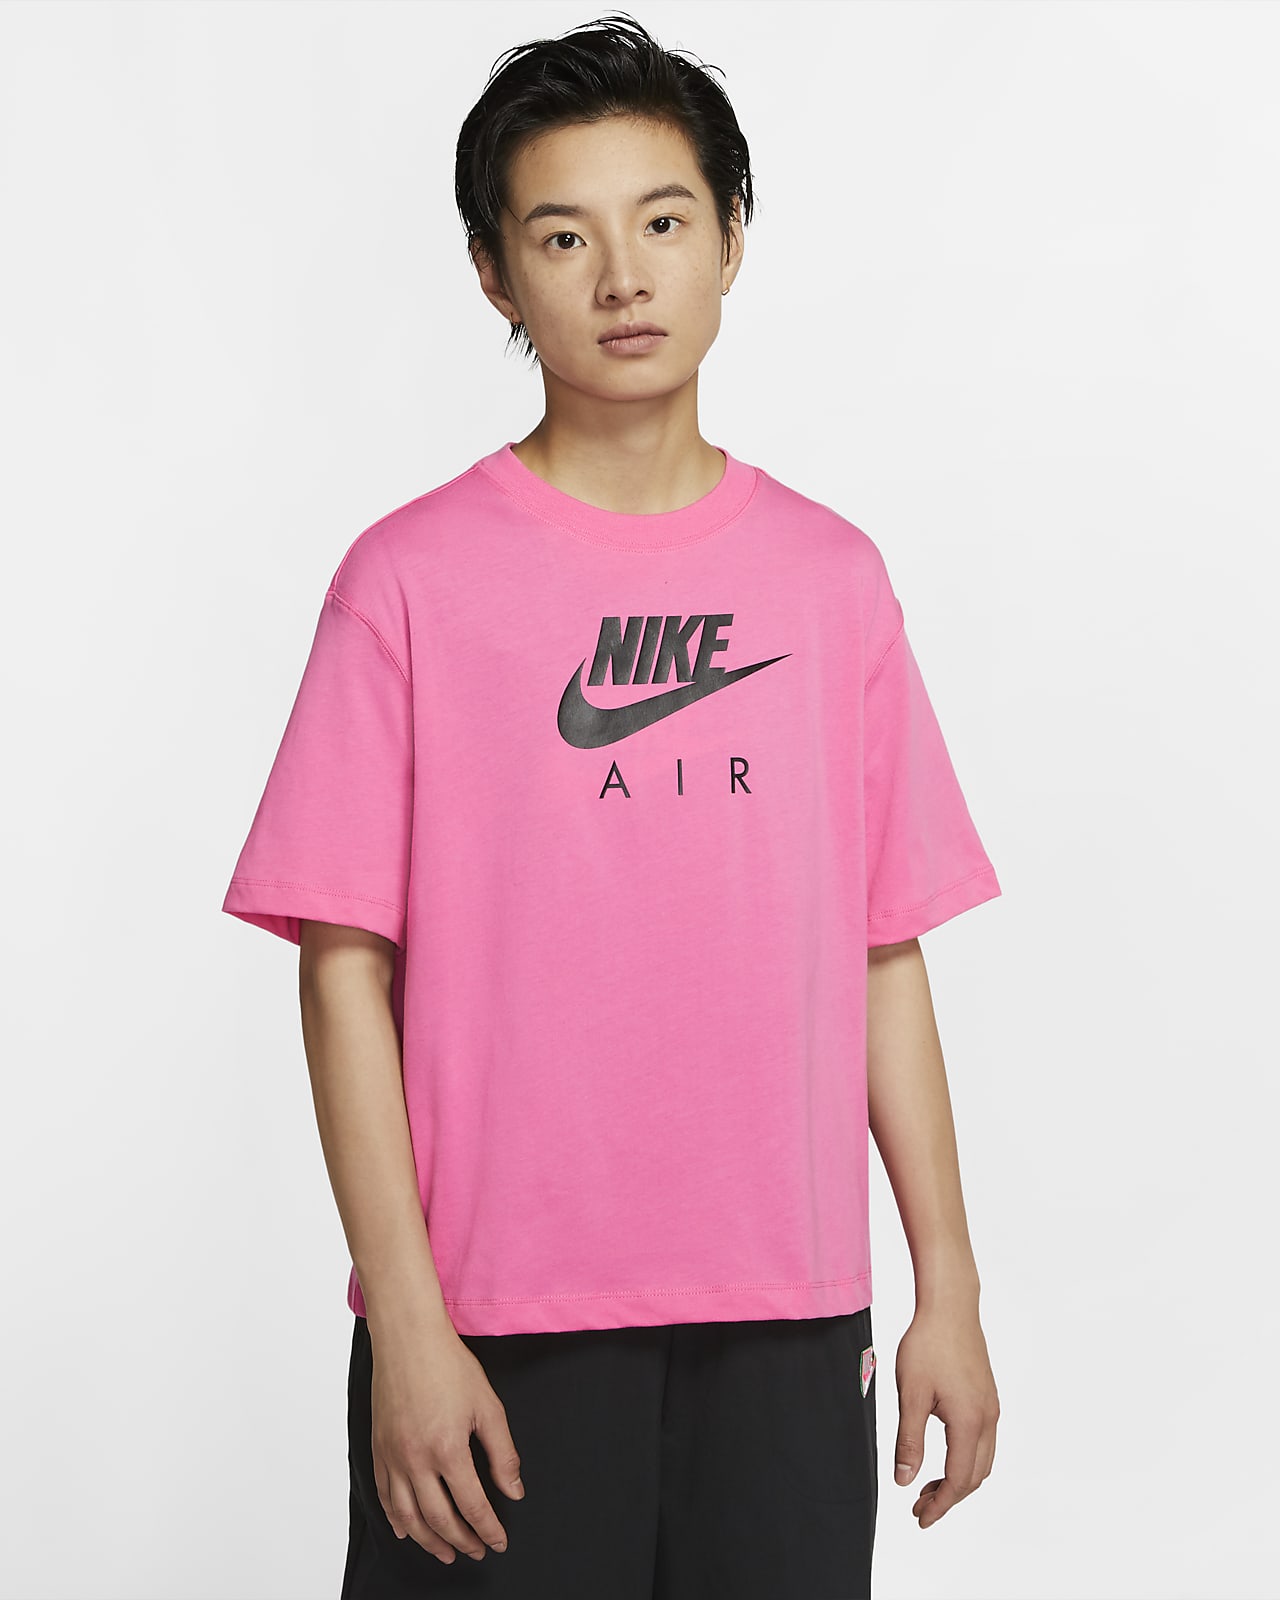 Nike Air Women's Short-Sleeve Top. Nike JP